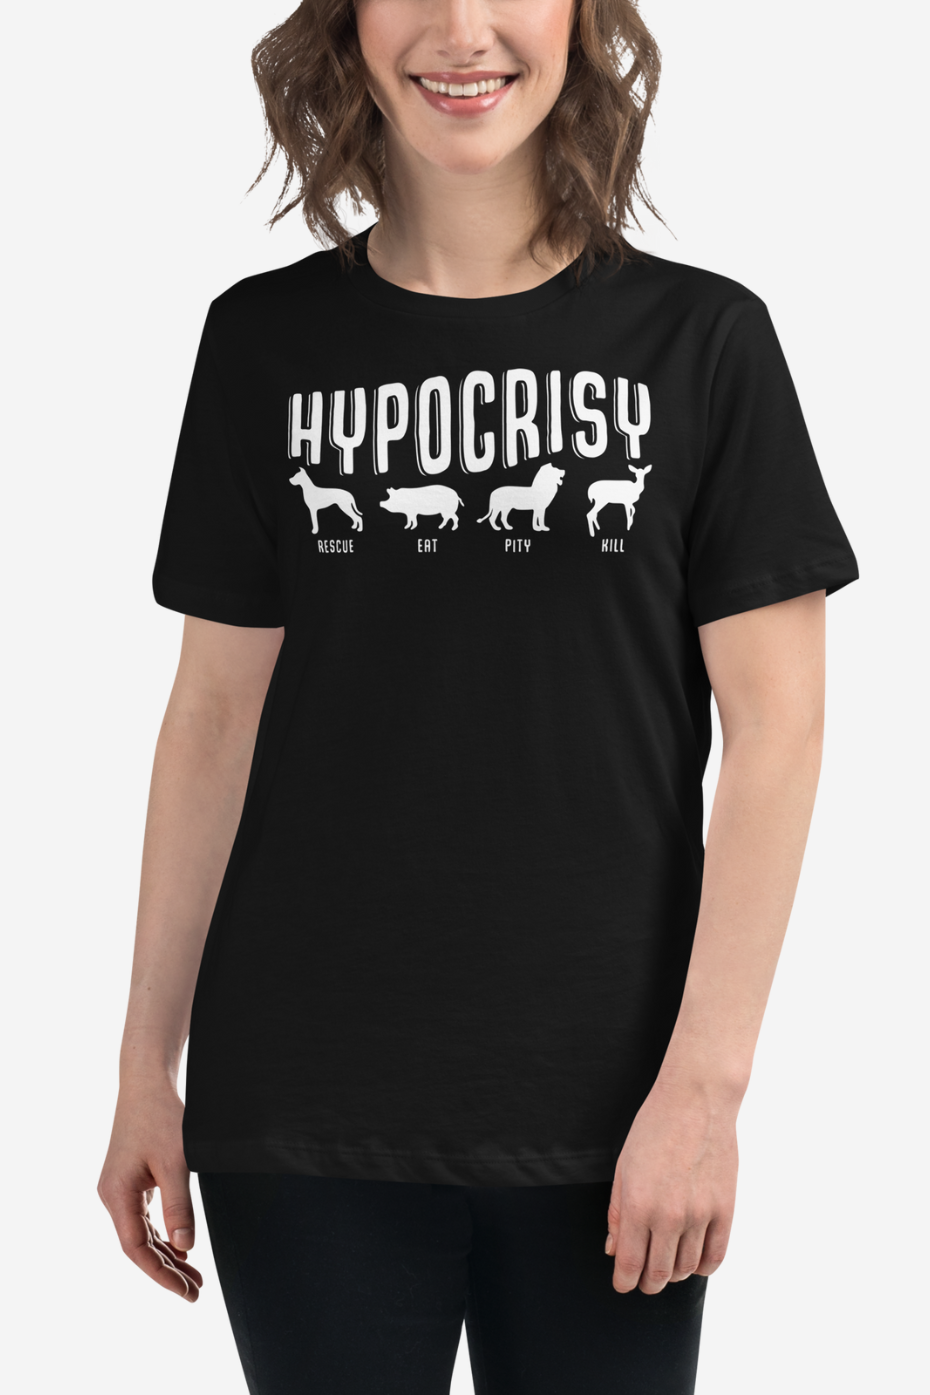 Hypocrisy Women's Relaxed T-Shirt